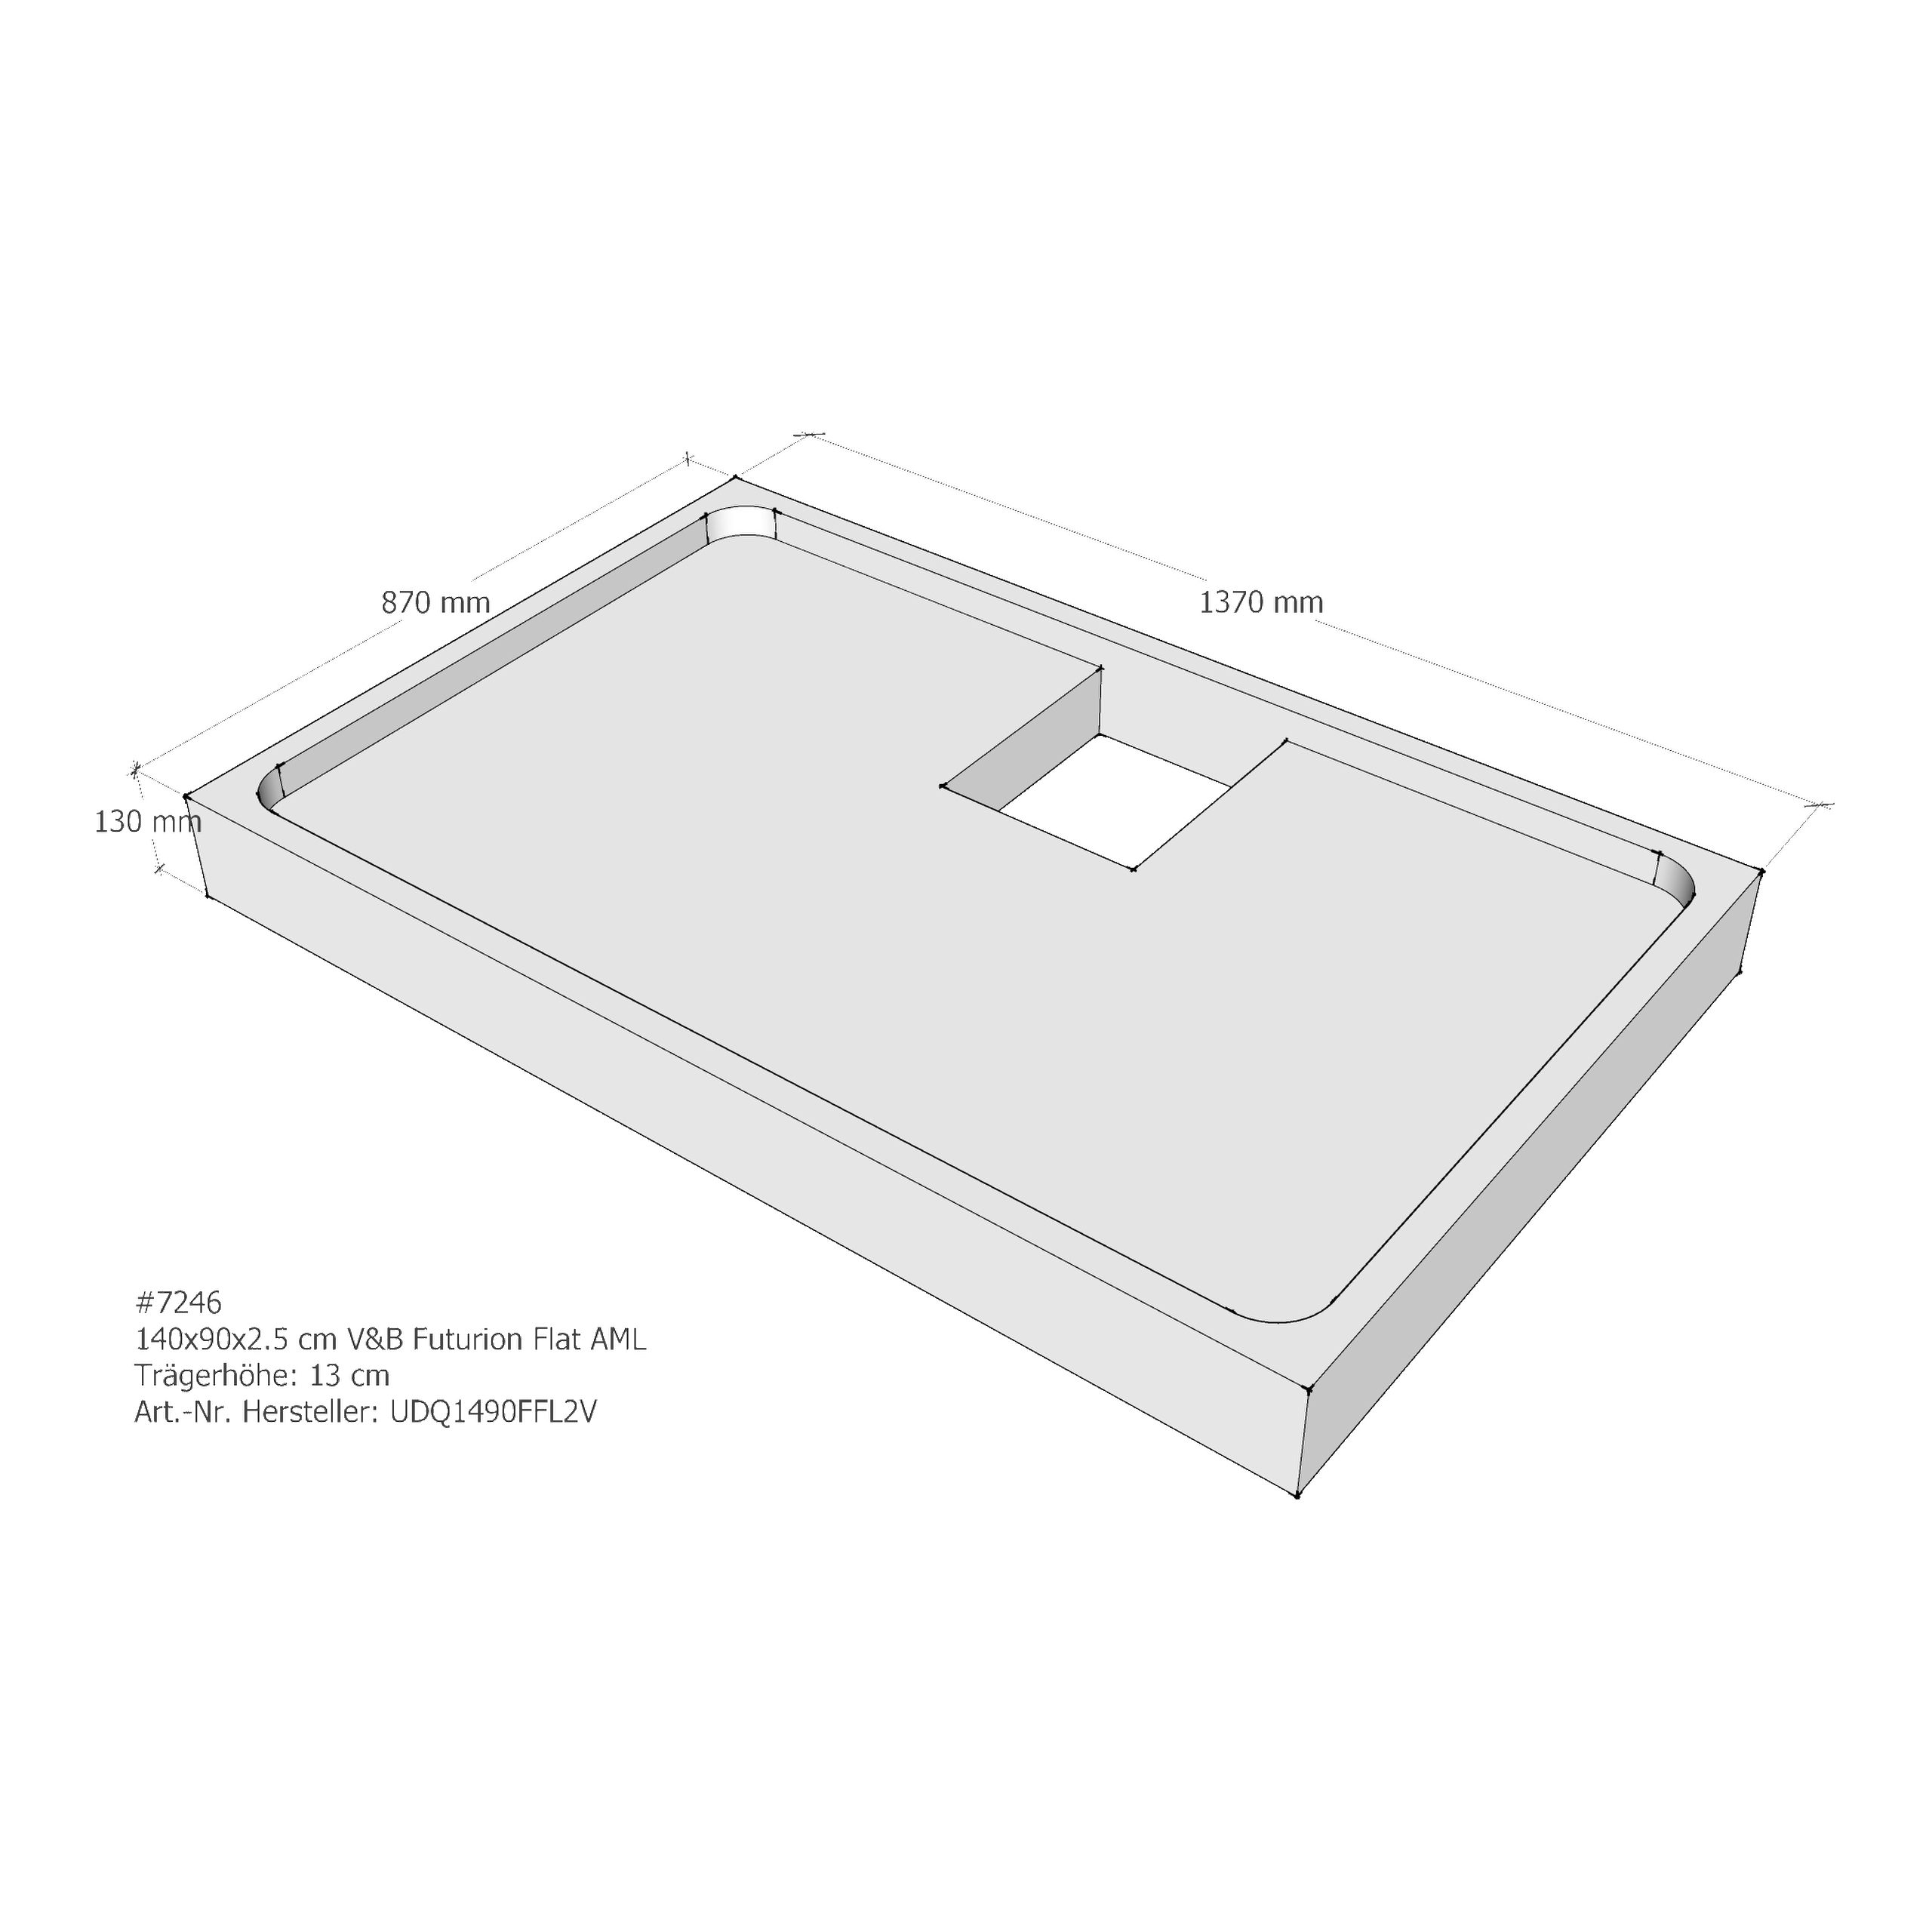 Duschwannenträger für Villeroy & Boch Futurion Flat 140 × 90 × 2,5 cm